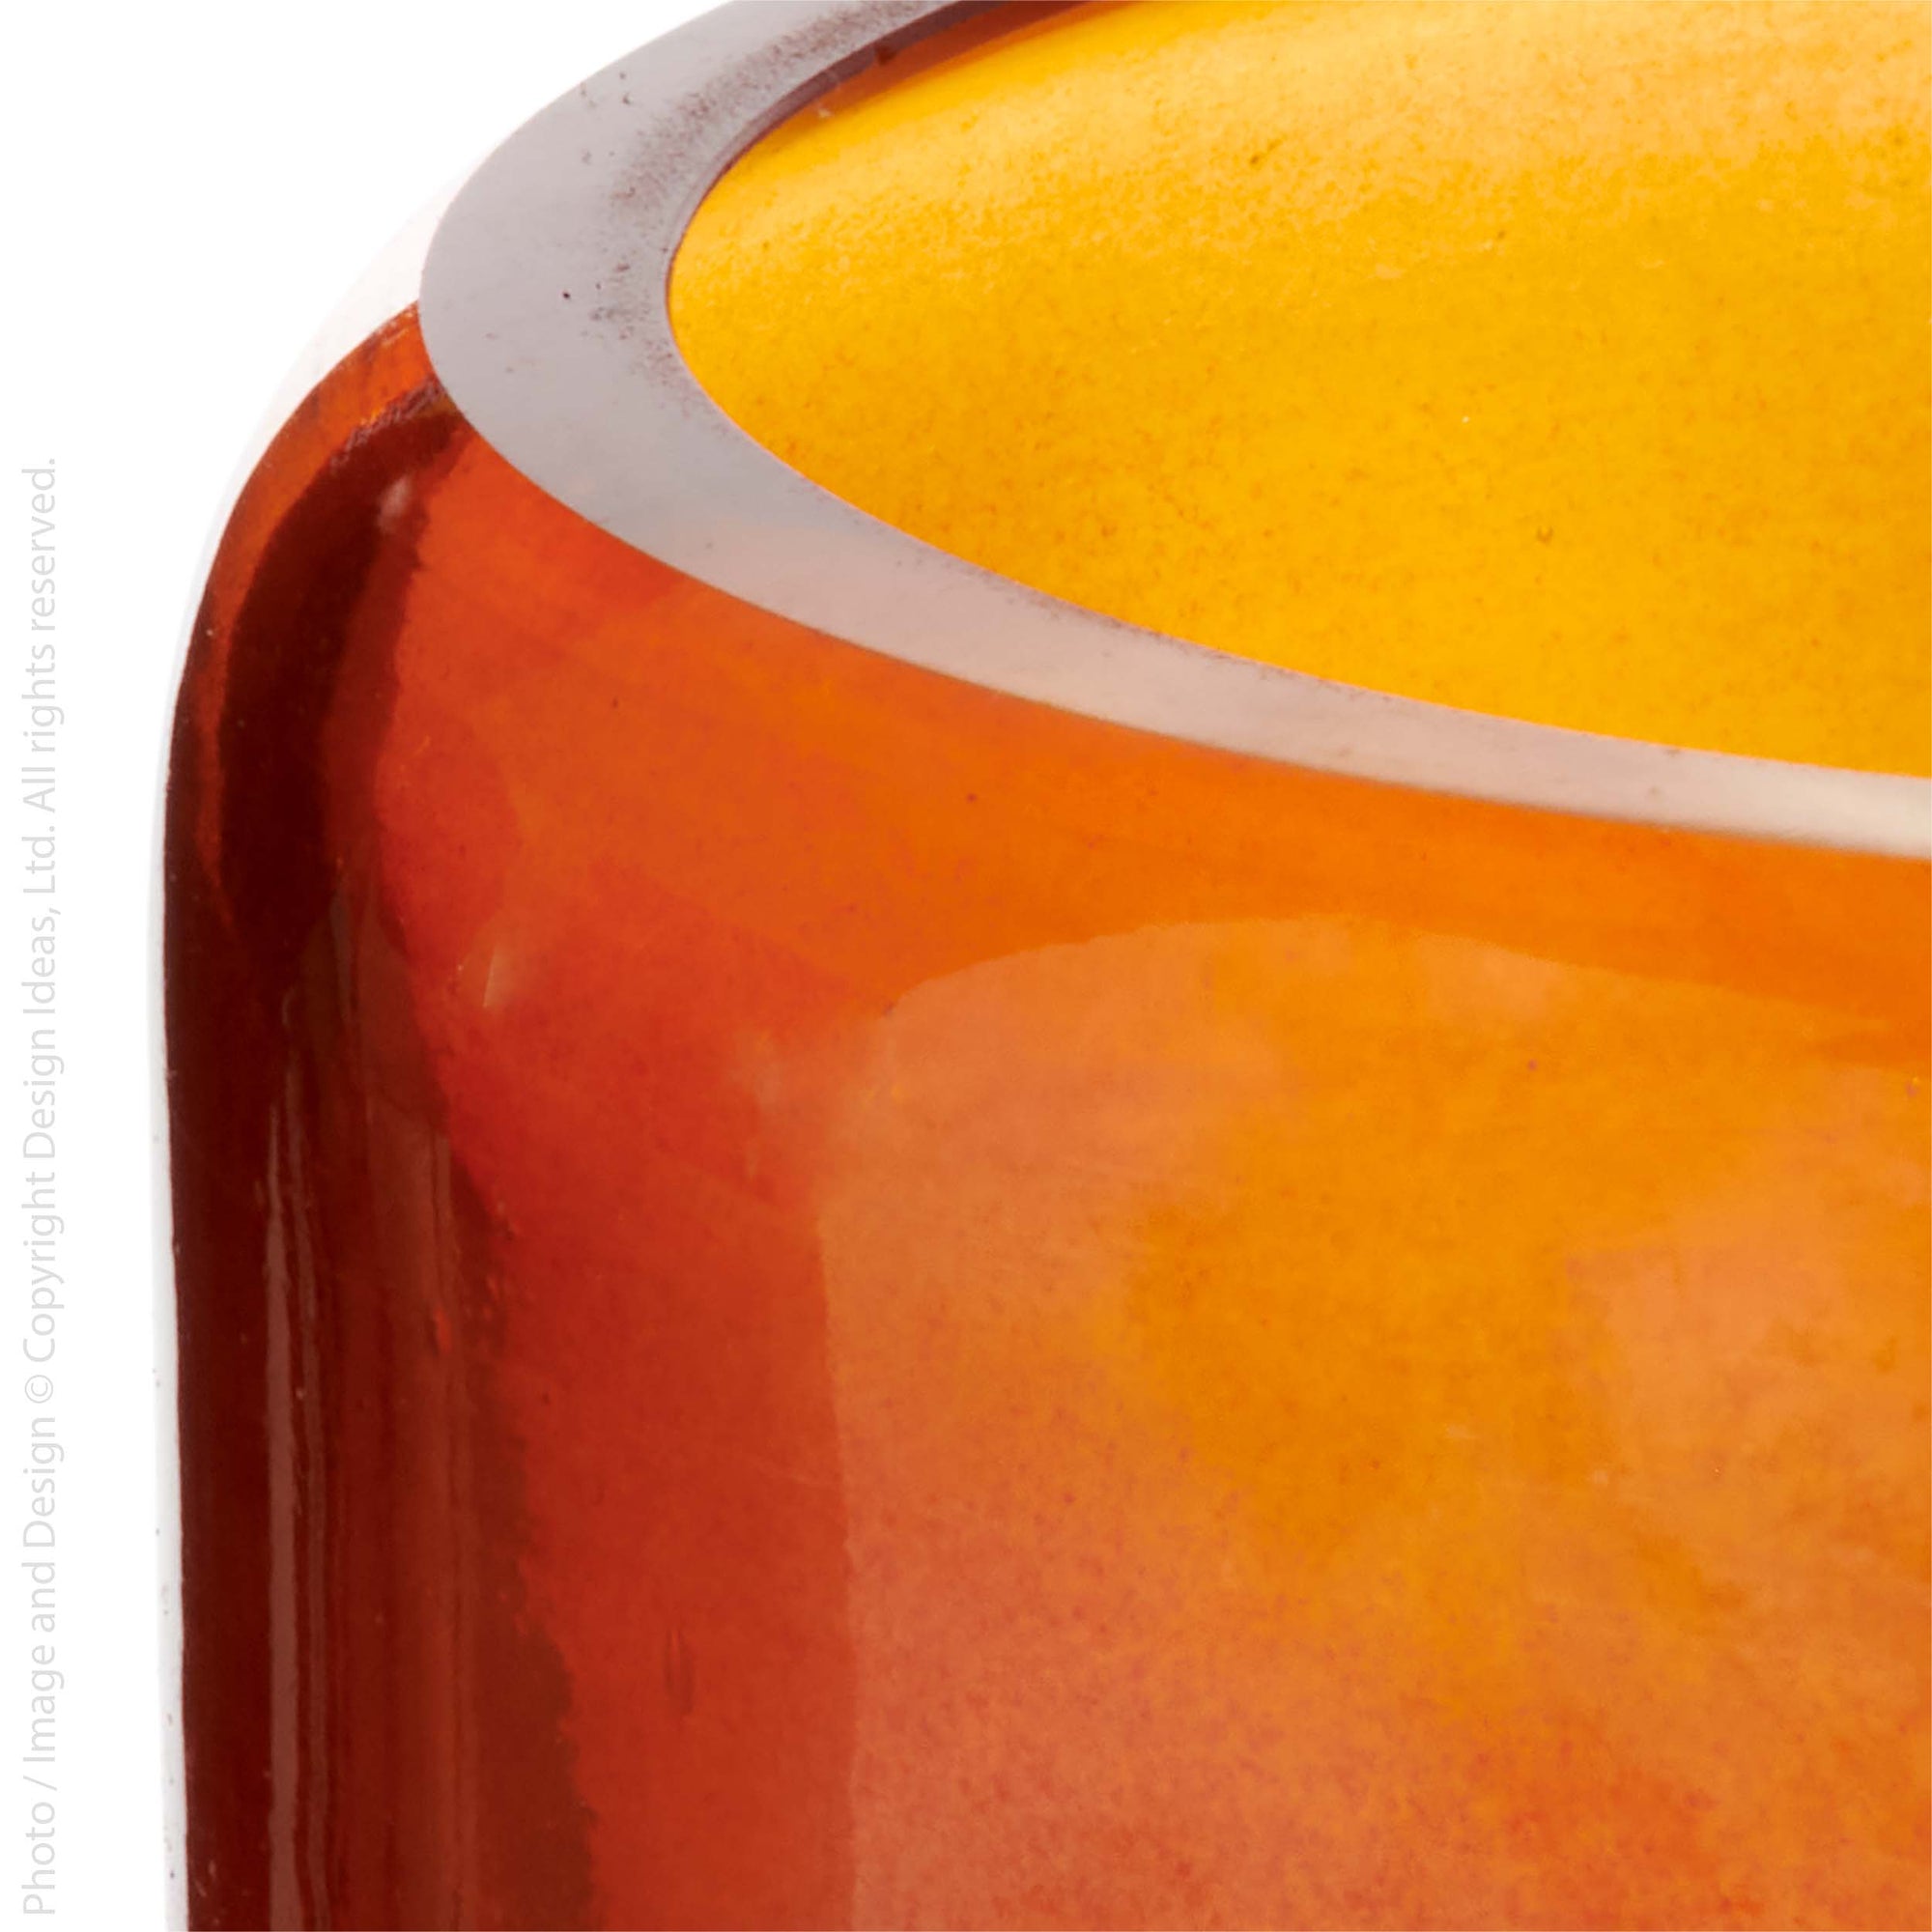 Hubbard™ Orange Luster Glass Votive Candle Holder